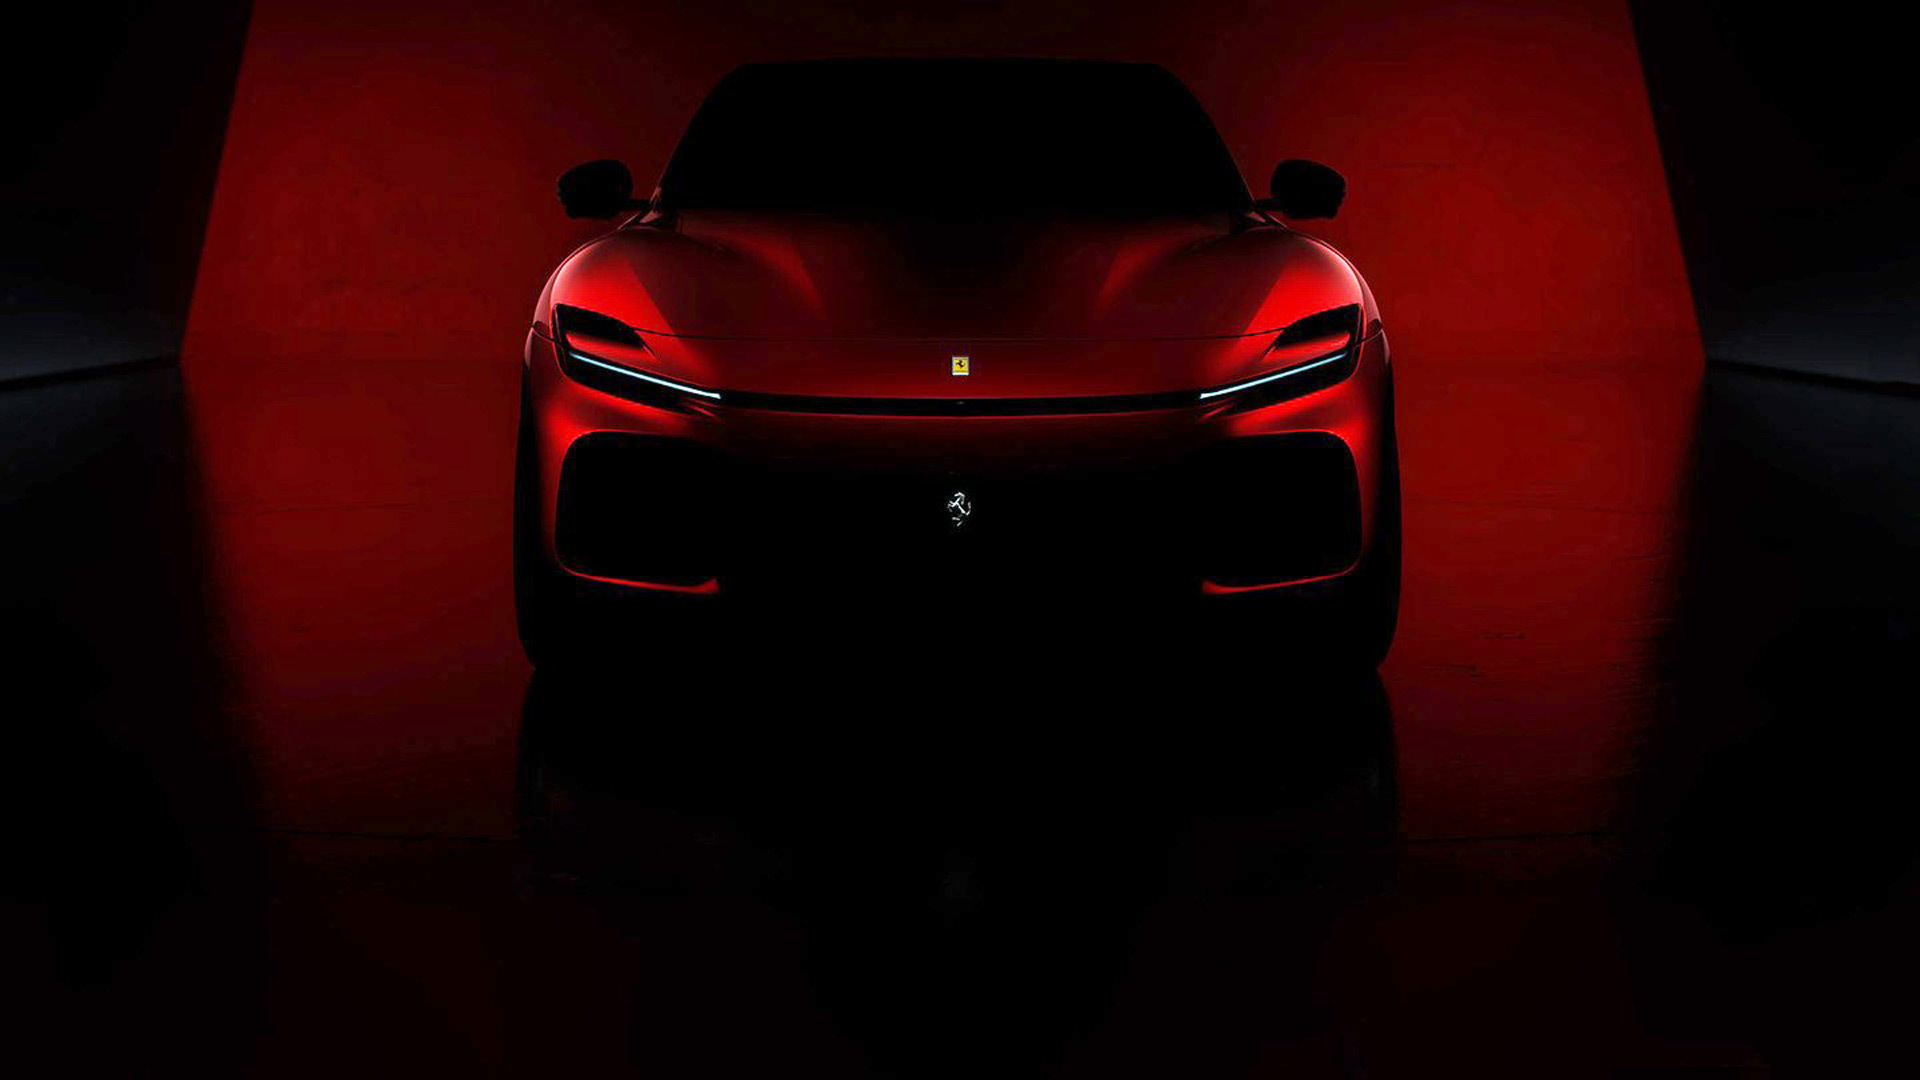 Teaser for Ferrari Purosangue debuting in 2022